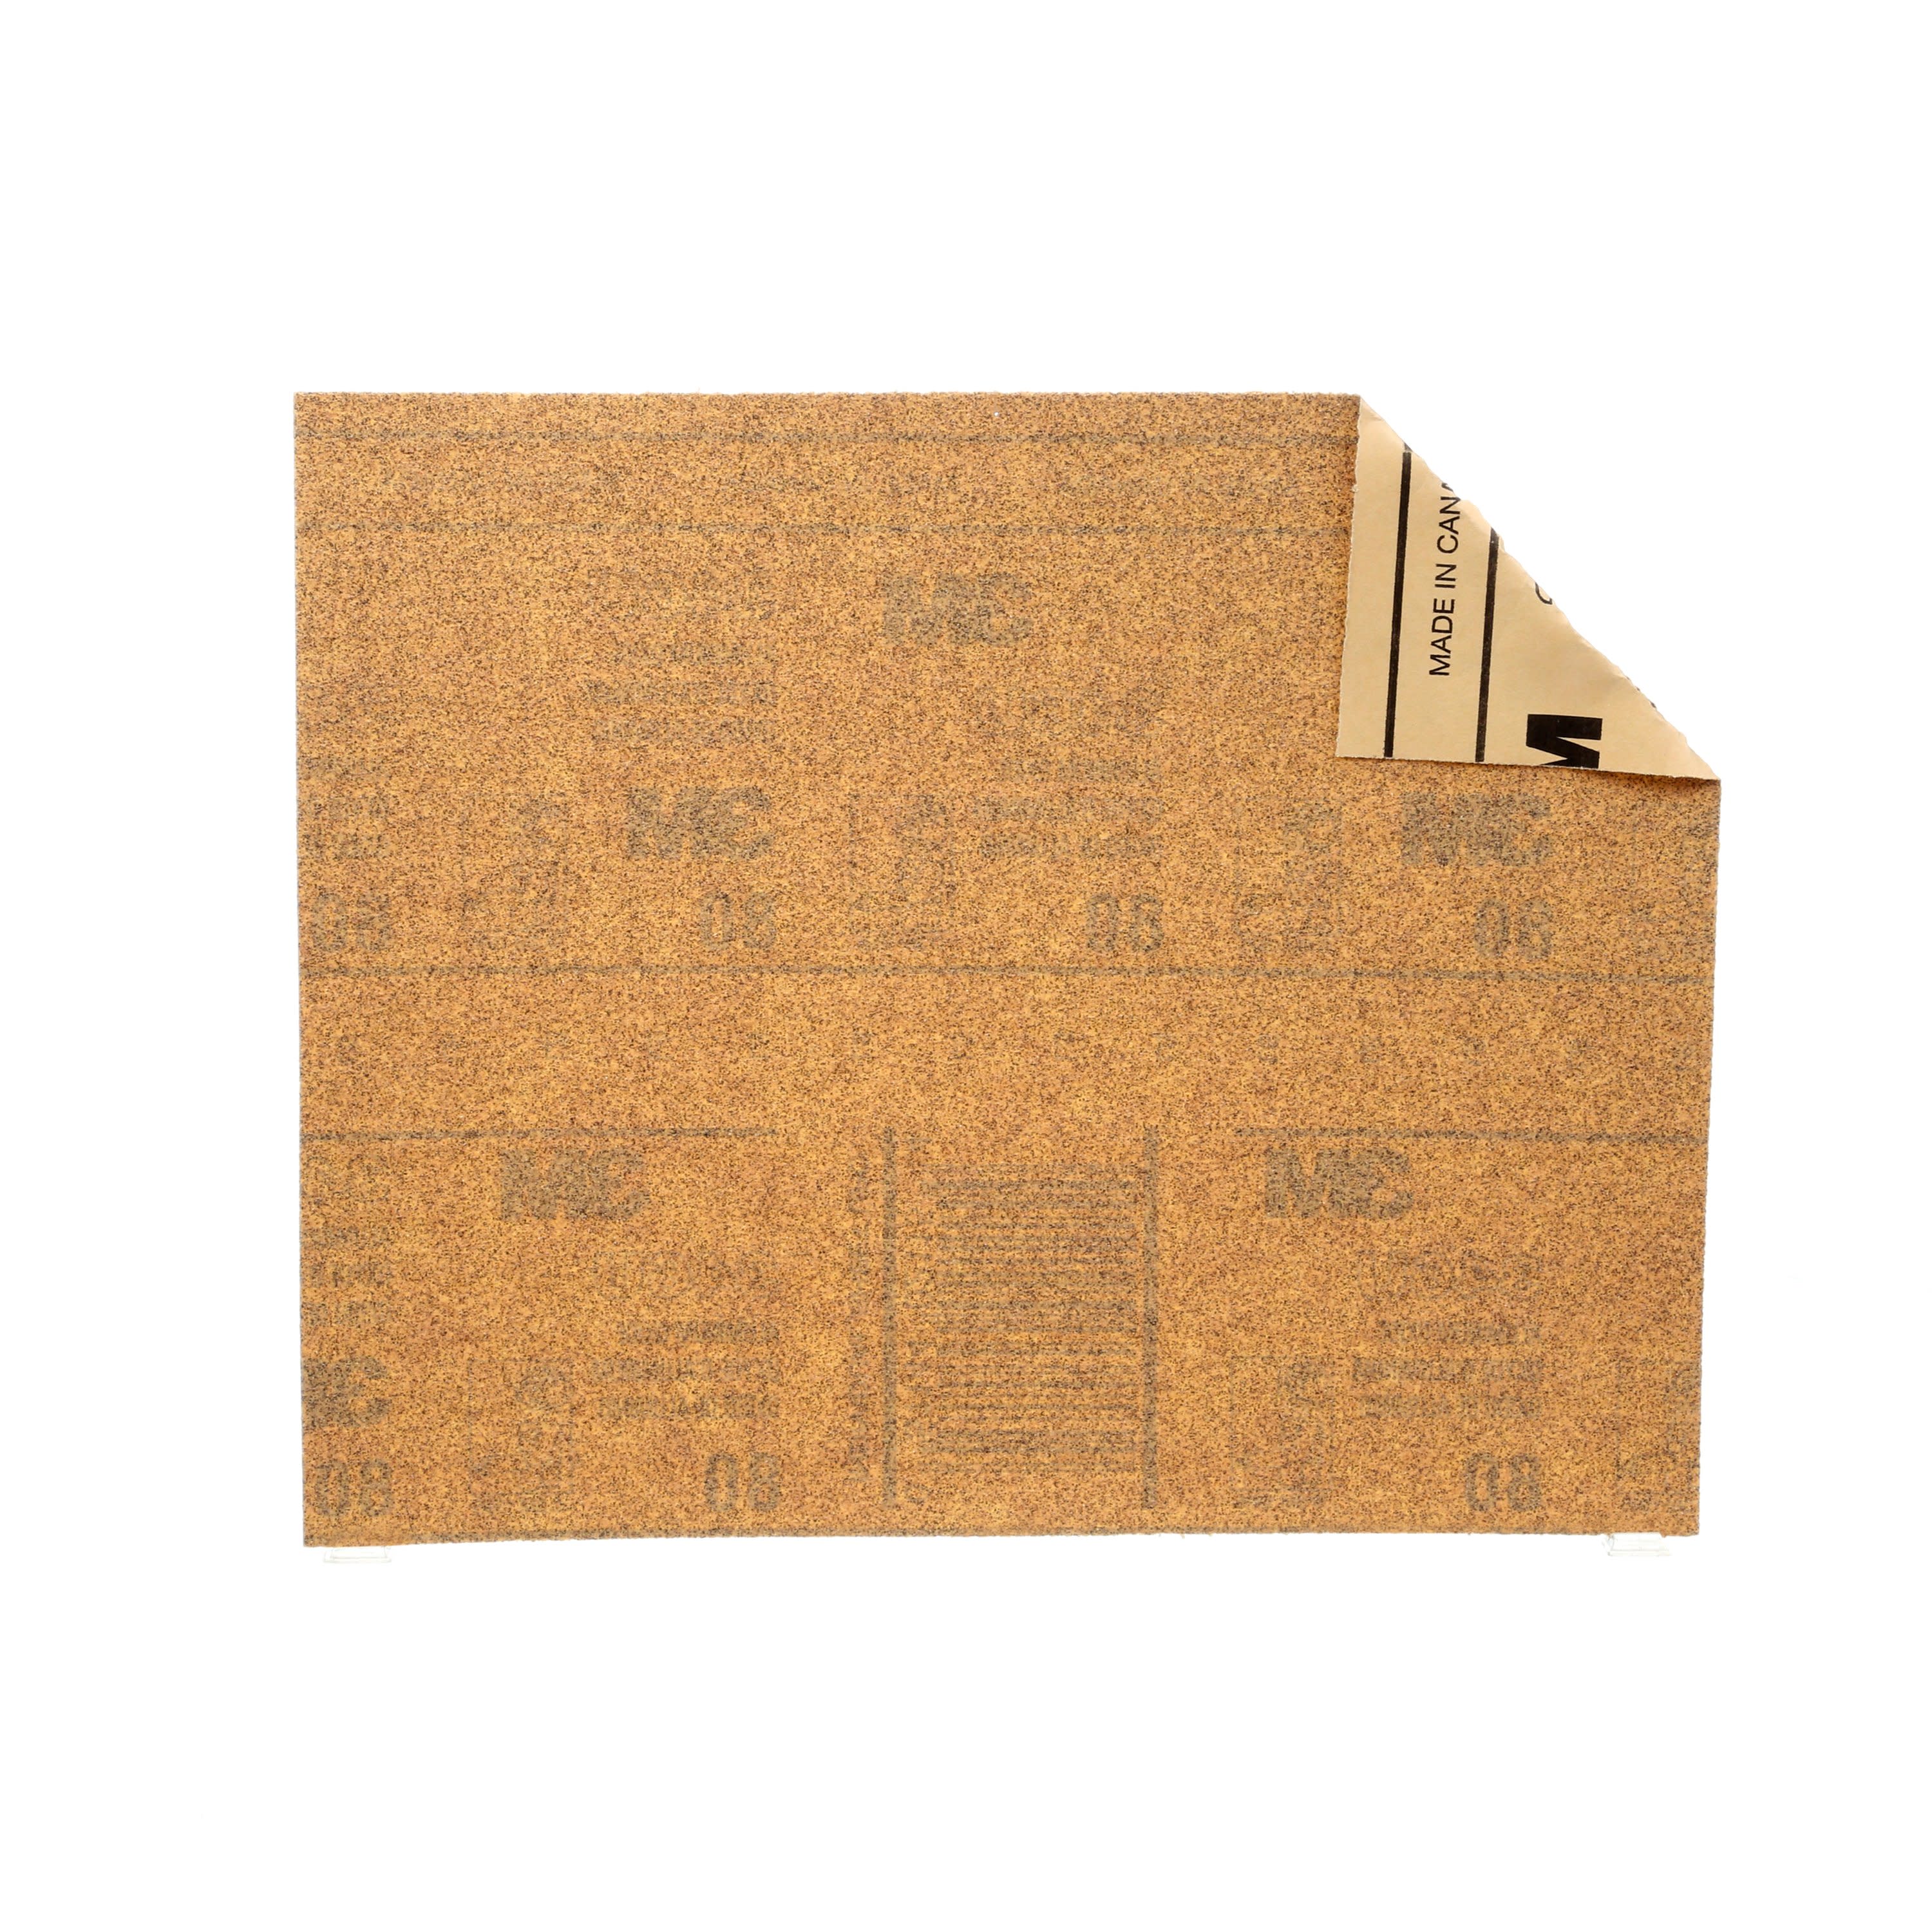 3m General Purpose 5 Sheets Assortment Sandpaper (2pks)